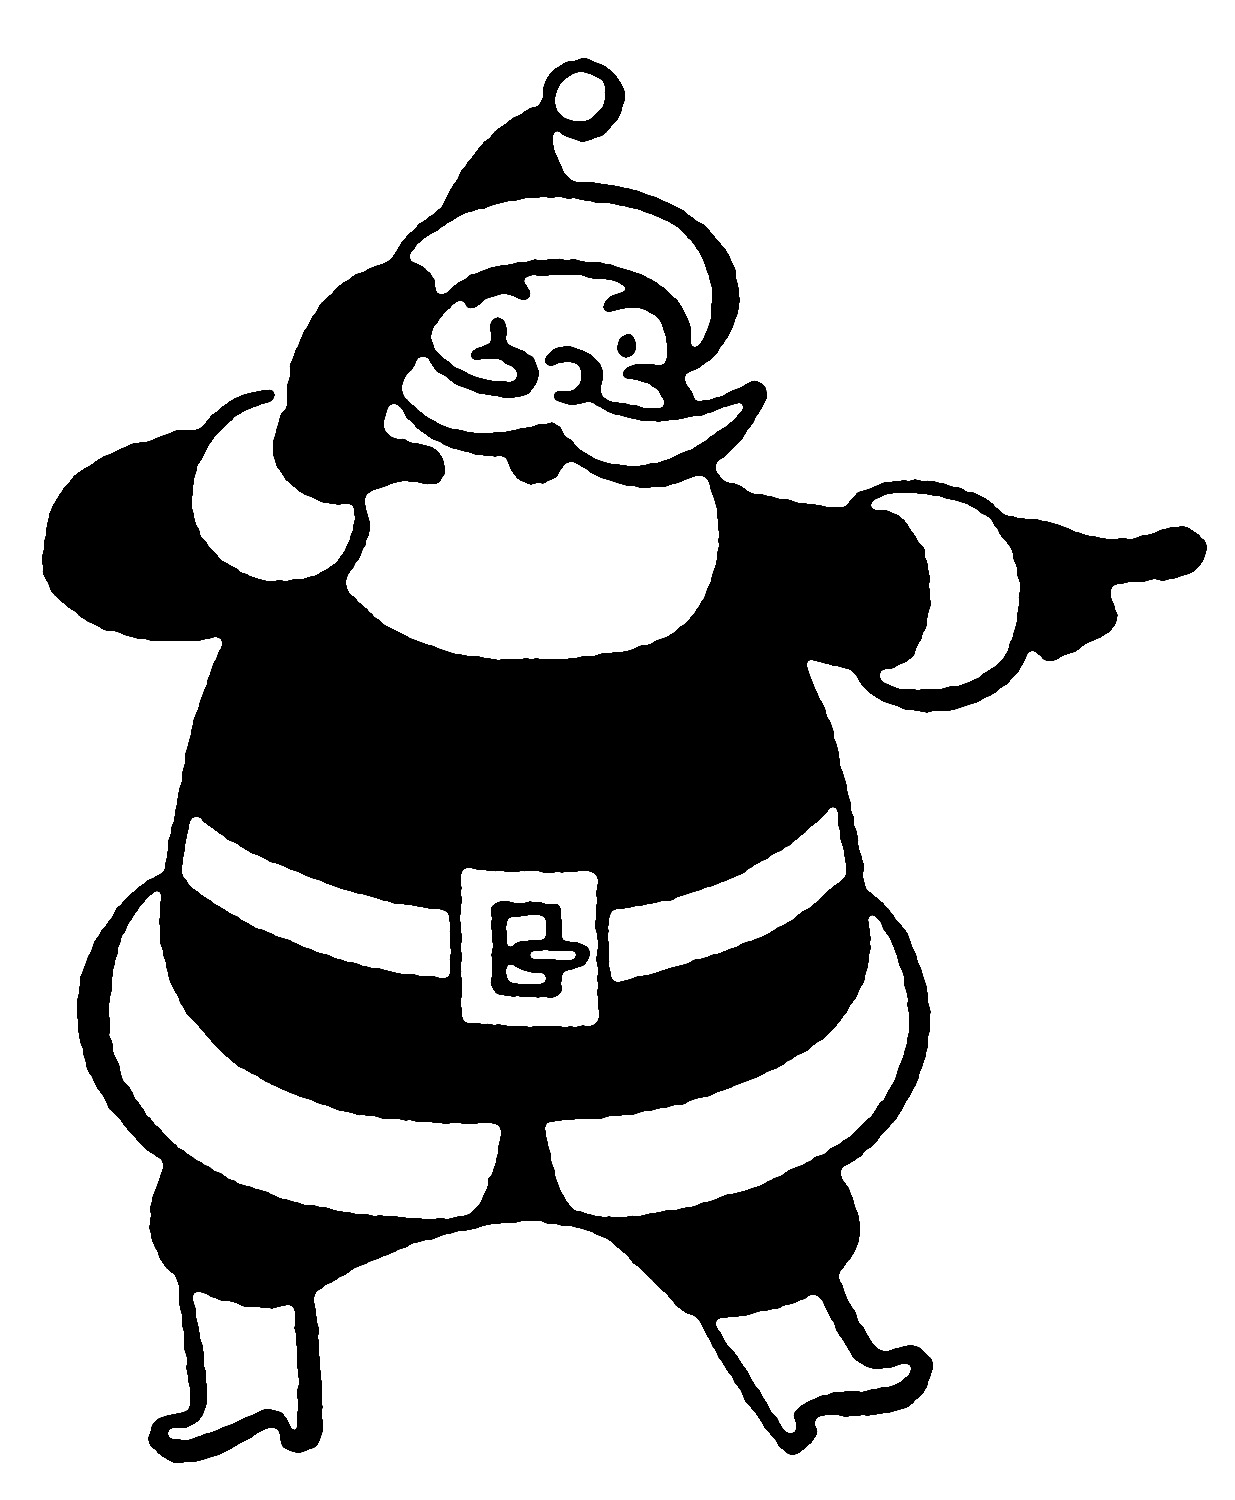 Retro Christmas Clip Art   Funny Santas   The Graphics Fairy